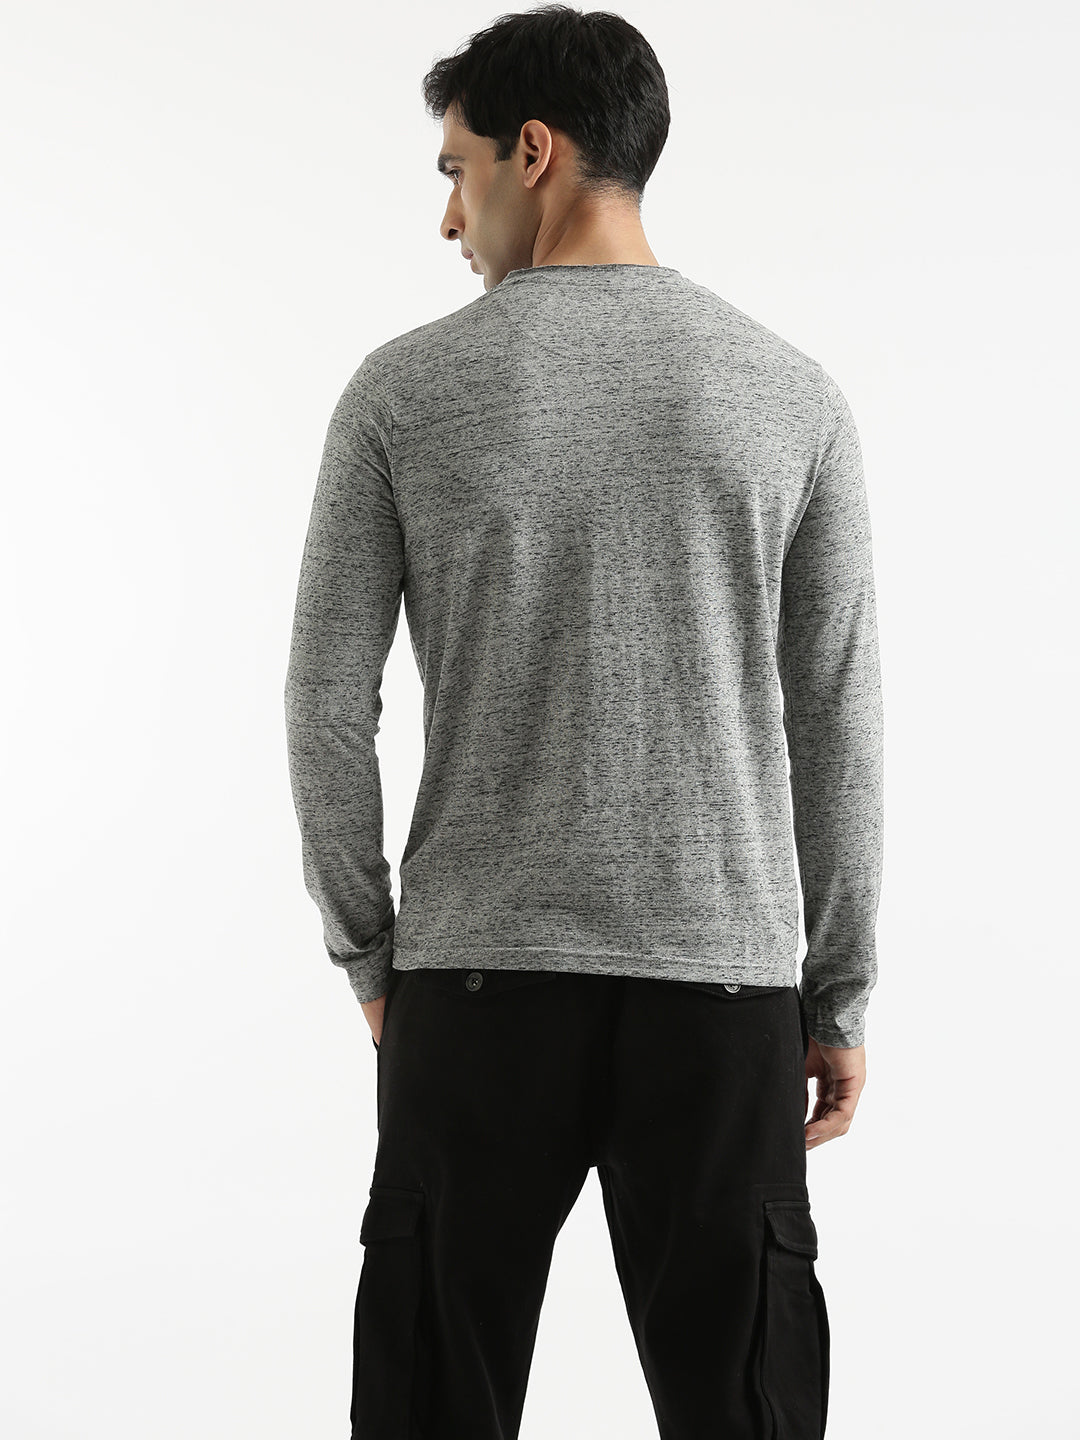 Abstract Melange Grey T-Shirt